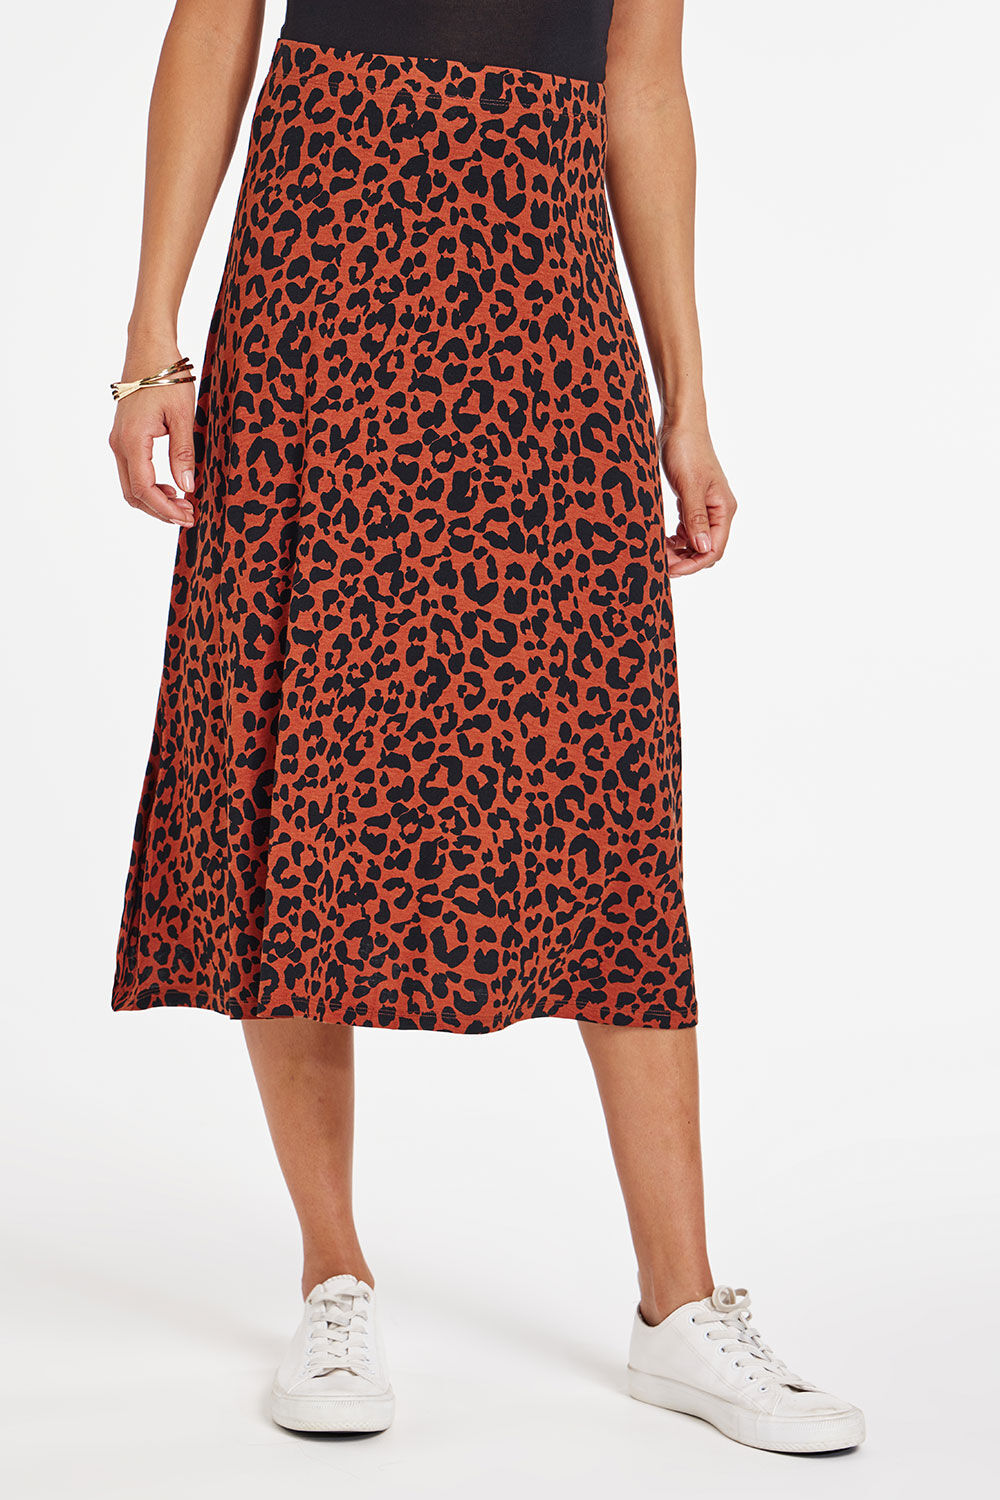 Bonmarche Brown Animal Print Flippy Jersey Elasticated Skirt, Size: 10